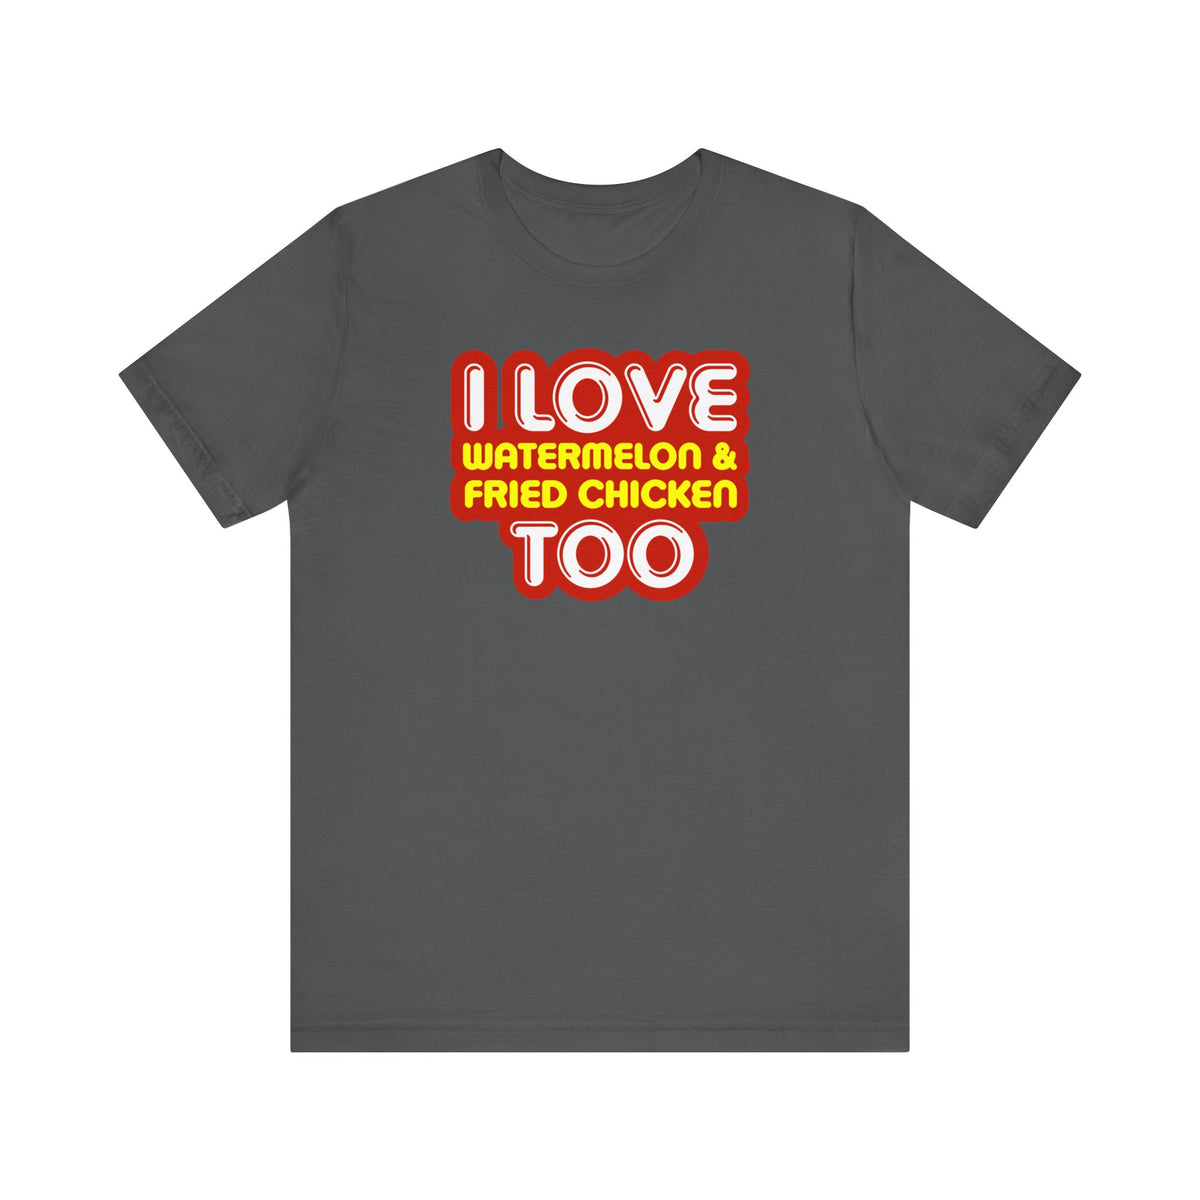 I Love Watermelon & Fried Chicken Too - Men's T-Shirt